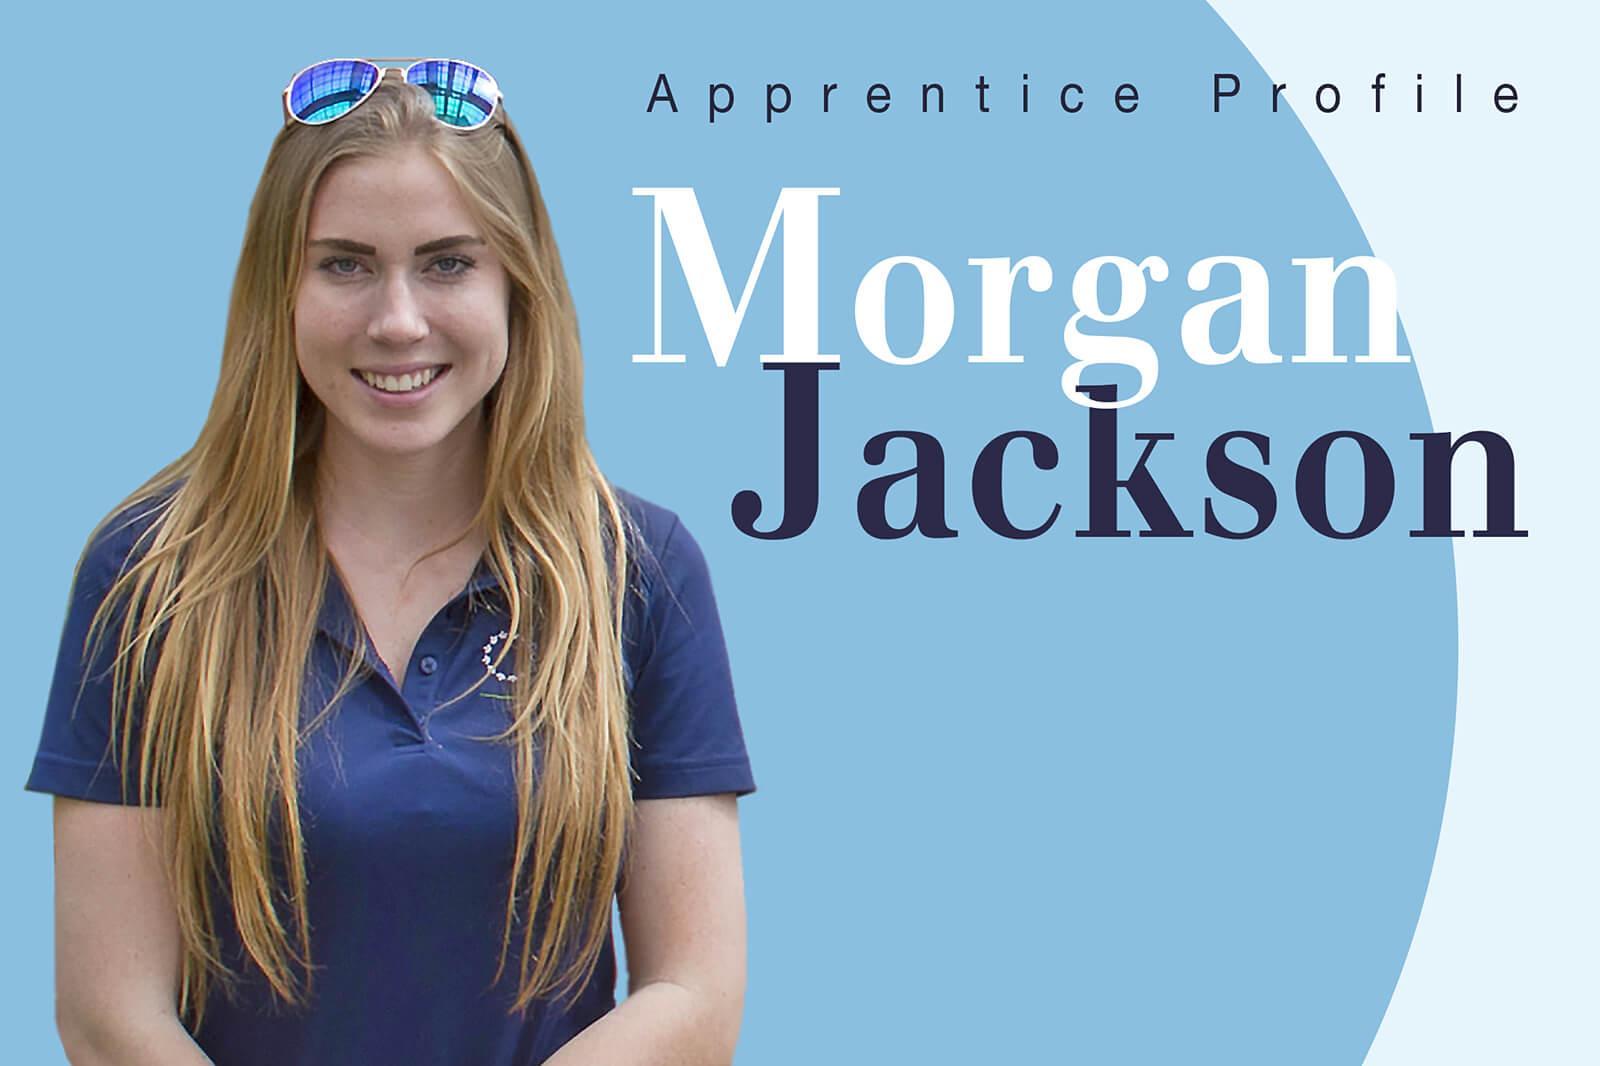 Apprentice Profile: Morgan Jackson